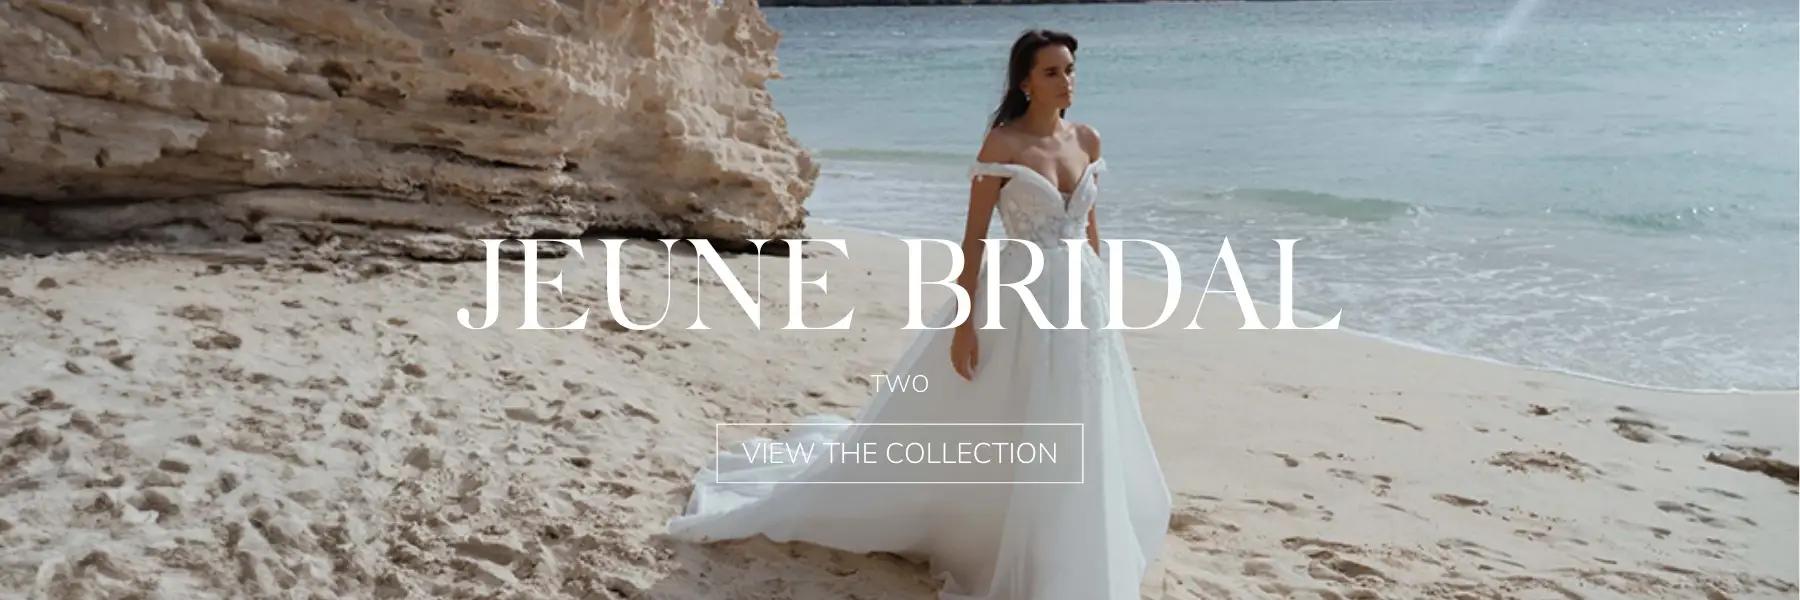 Model wearing Jeune Bridal gown